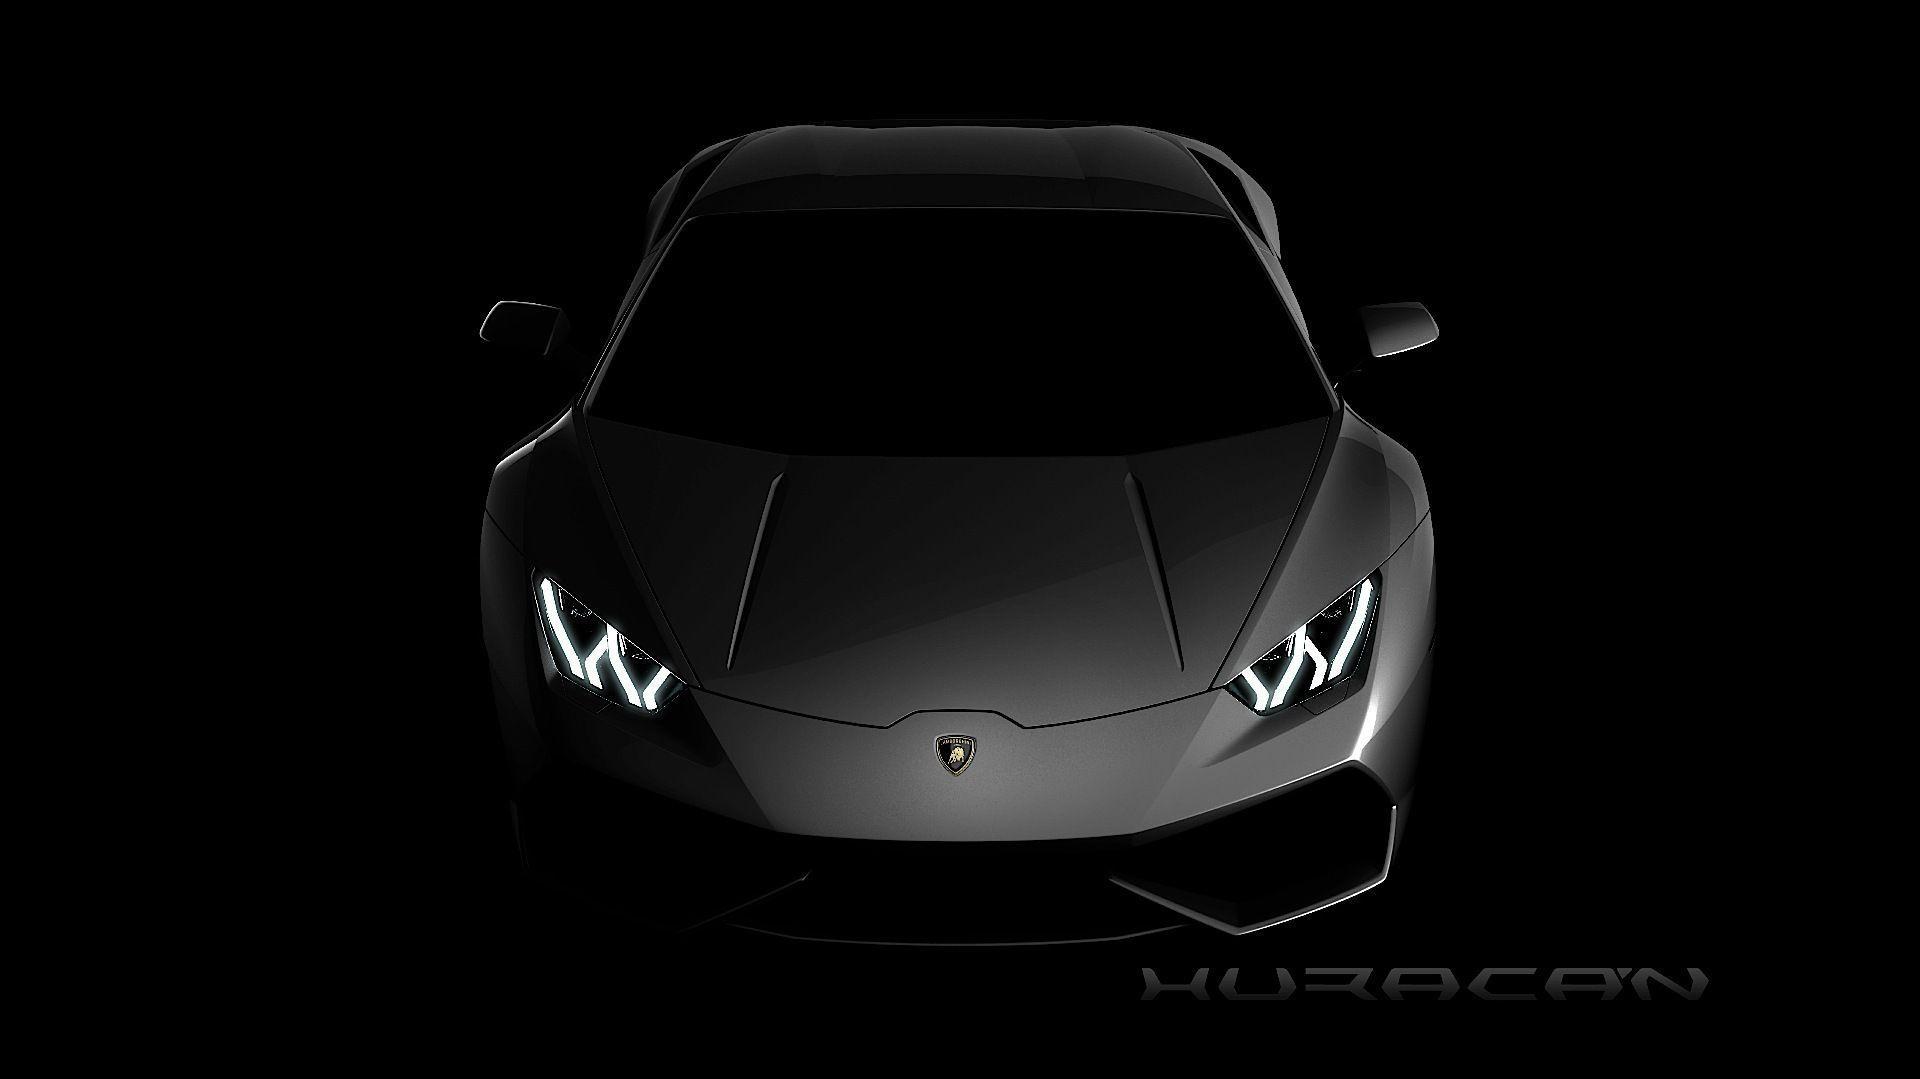 Lamborghini Huracan Wallpaper Hq